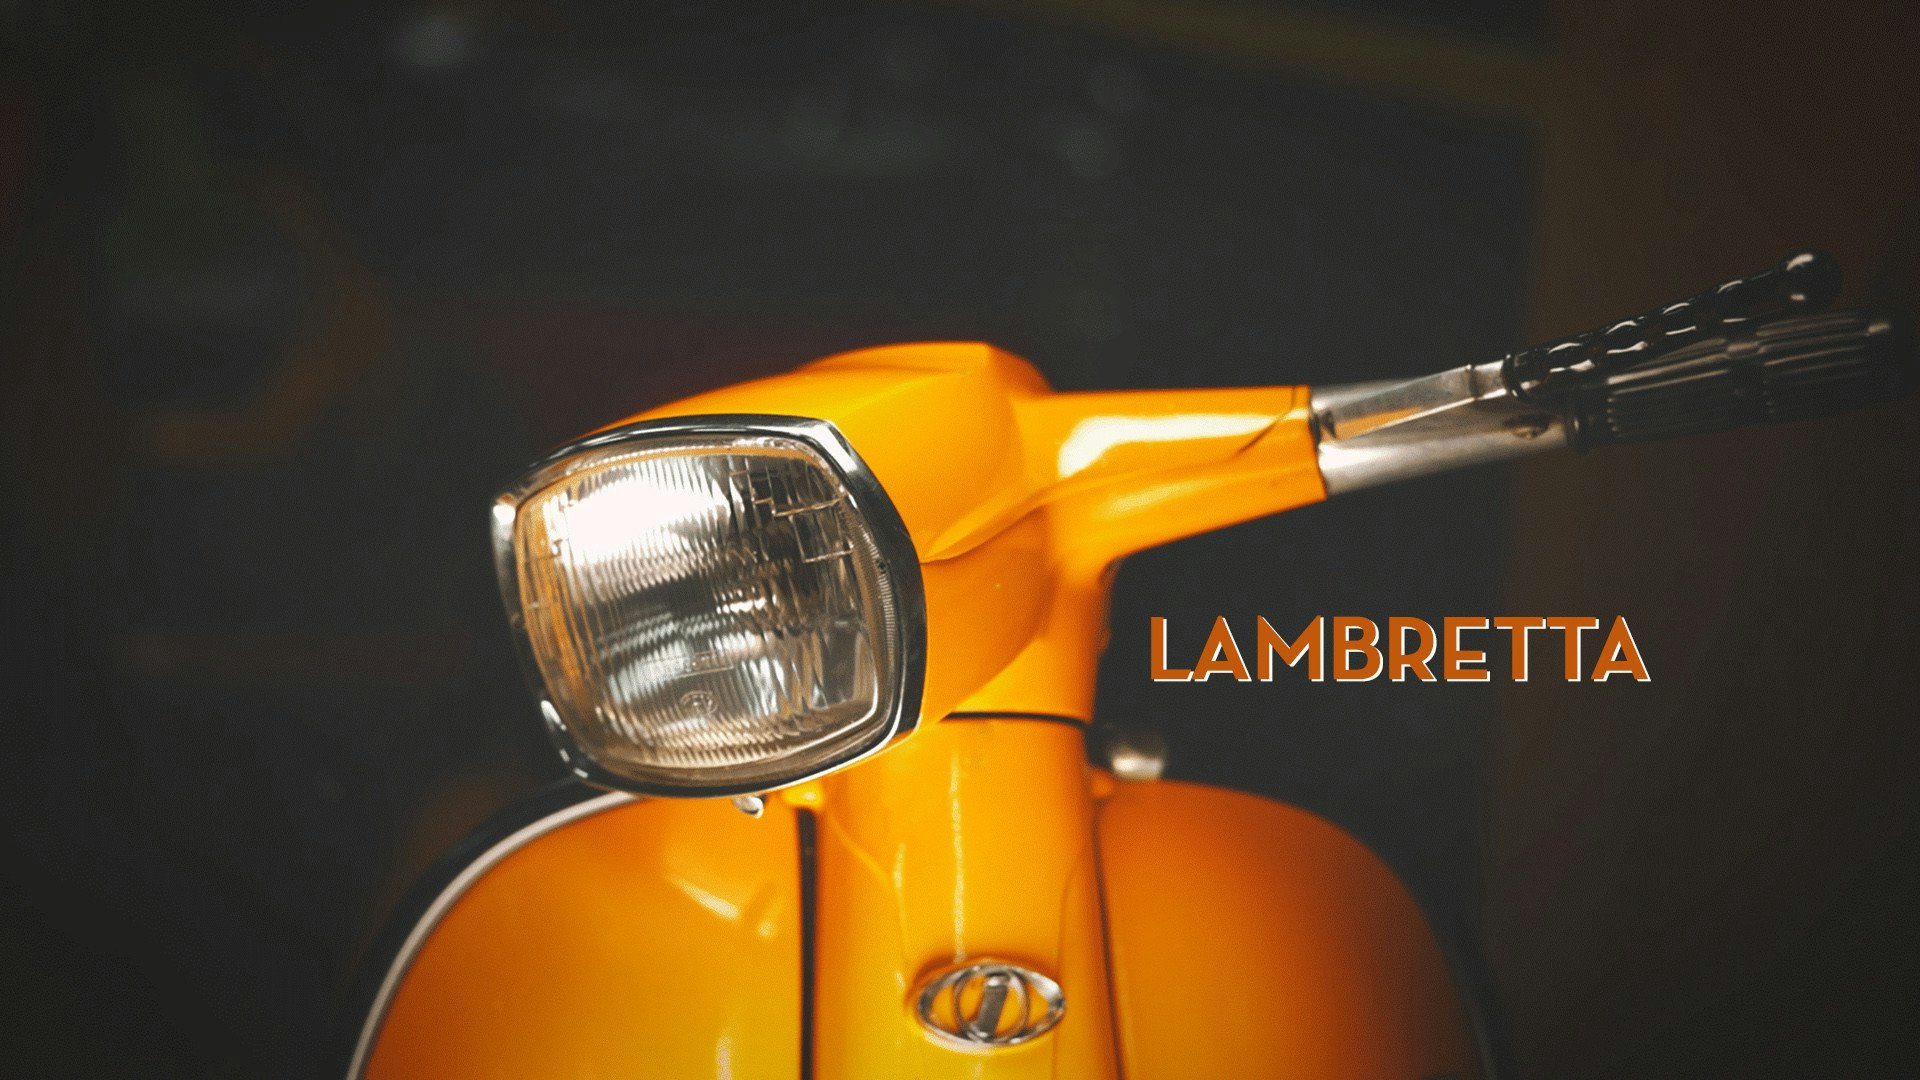 Lambretta Modellkunde, Klassik Szene Blog Vespa & Lambretta